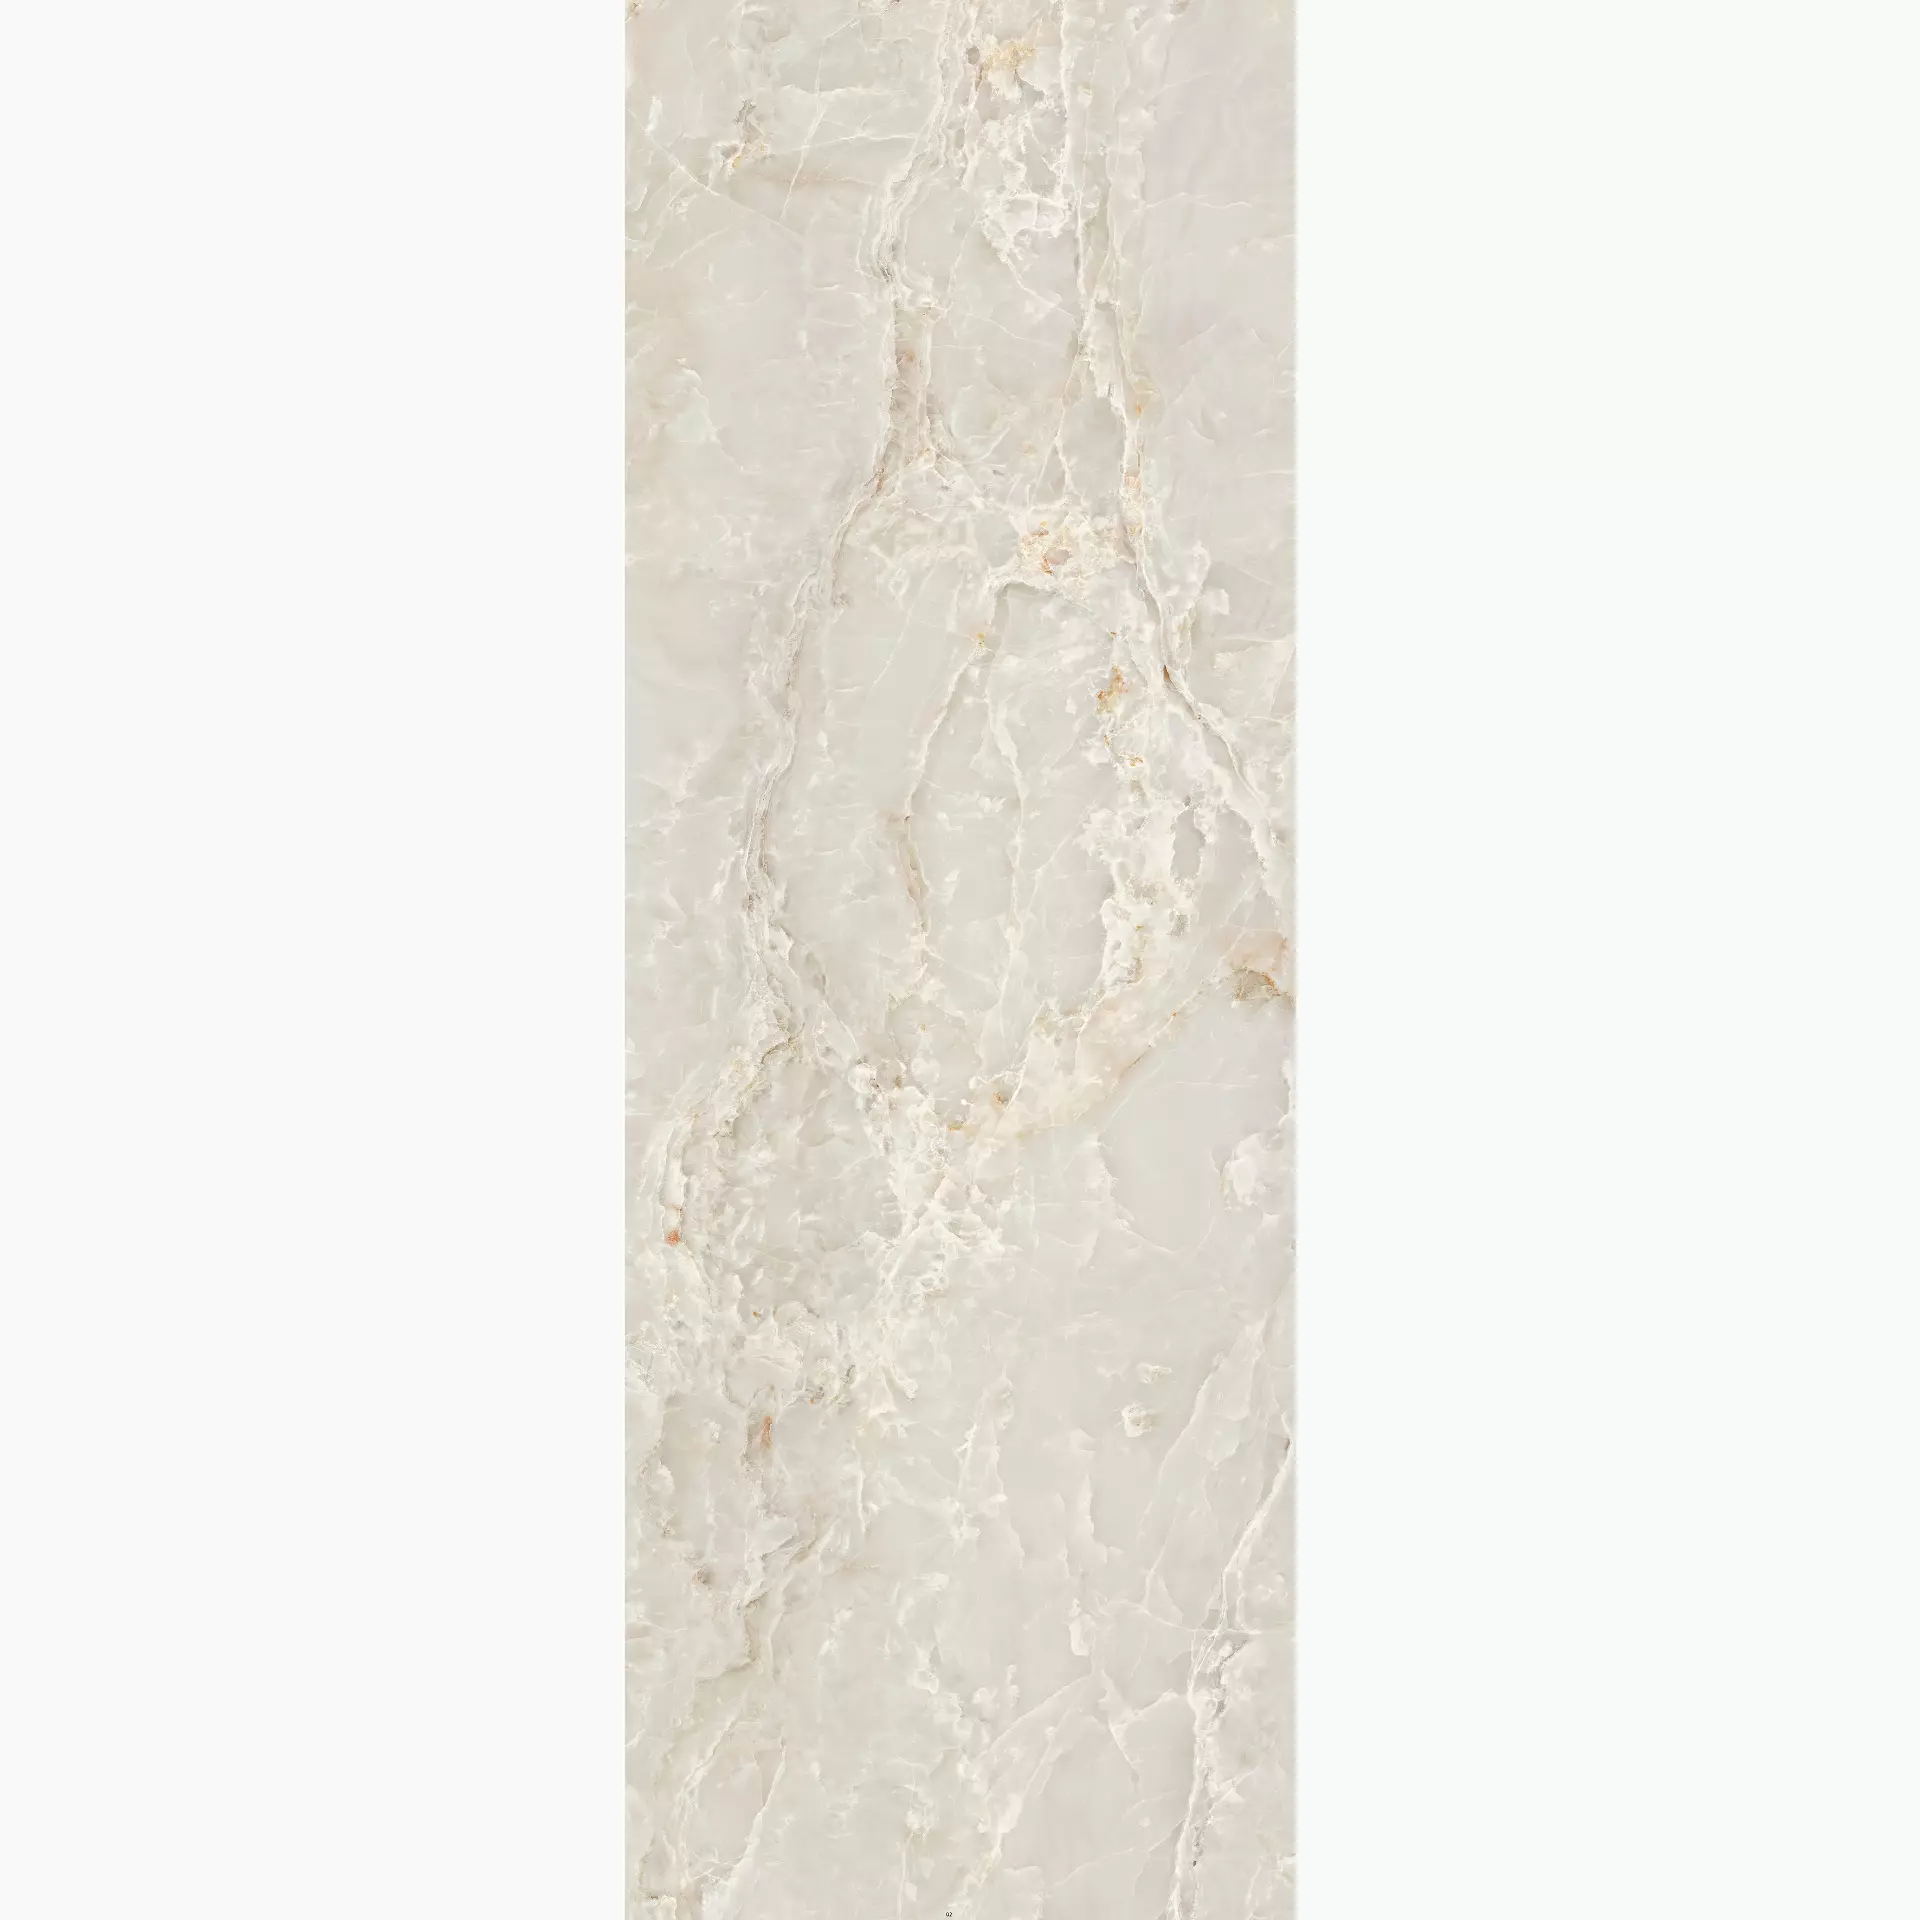 Cottodeste Kerlite Starlight Onyx Pearl Smooth Protect EK7SL70 100x300cm rectified 3,5mm